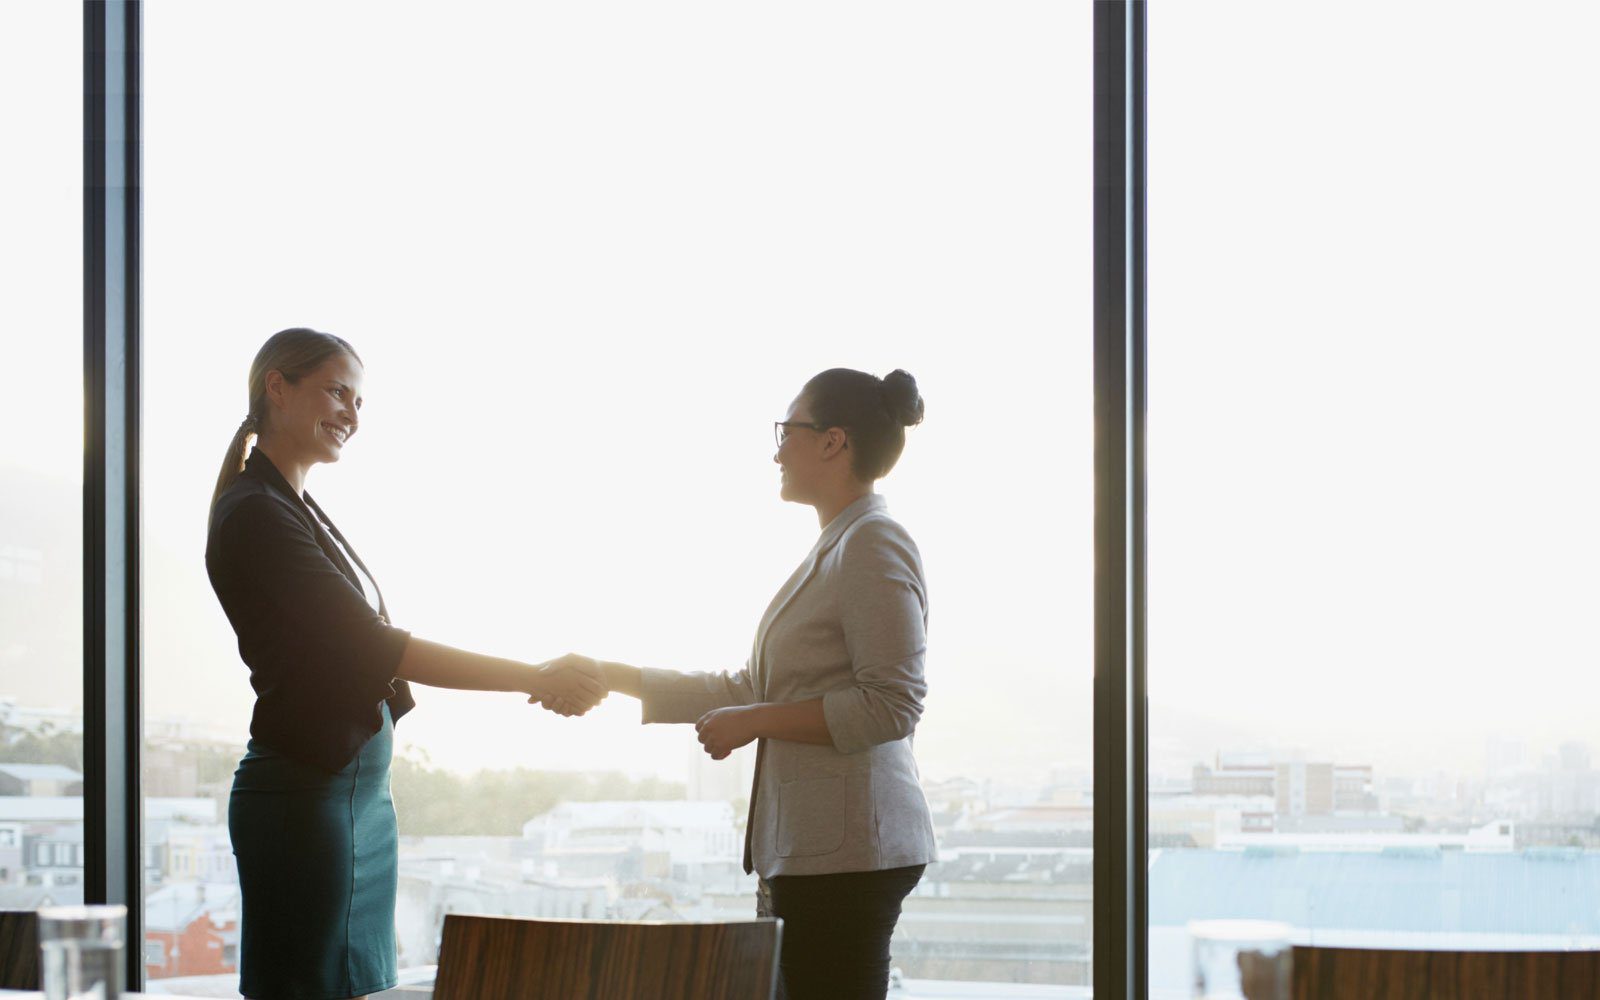 NEXTAFF recruitment agency franchise business women shaking hands.